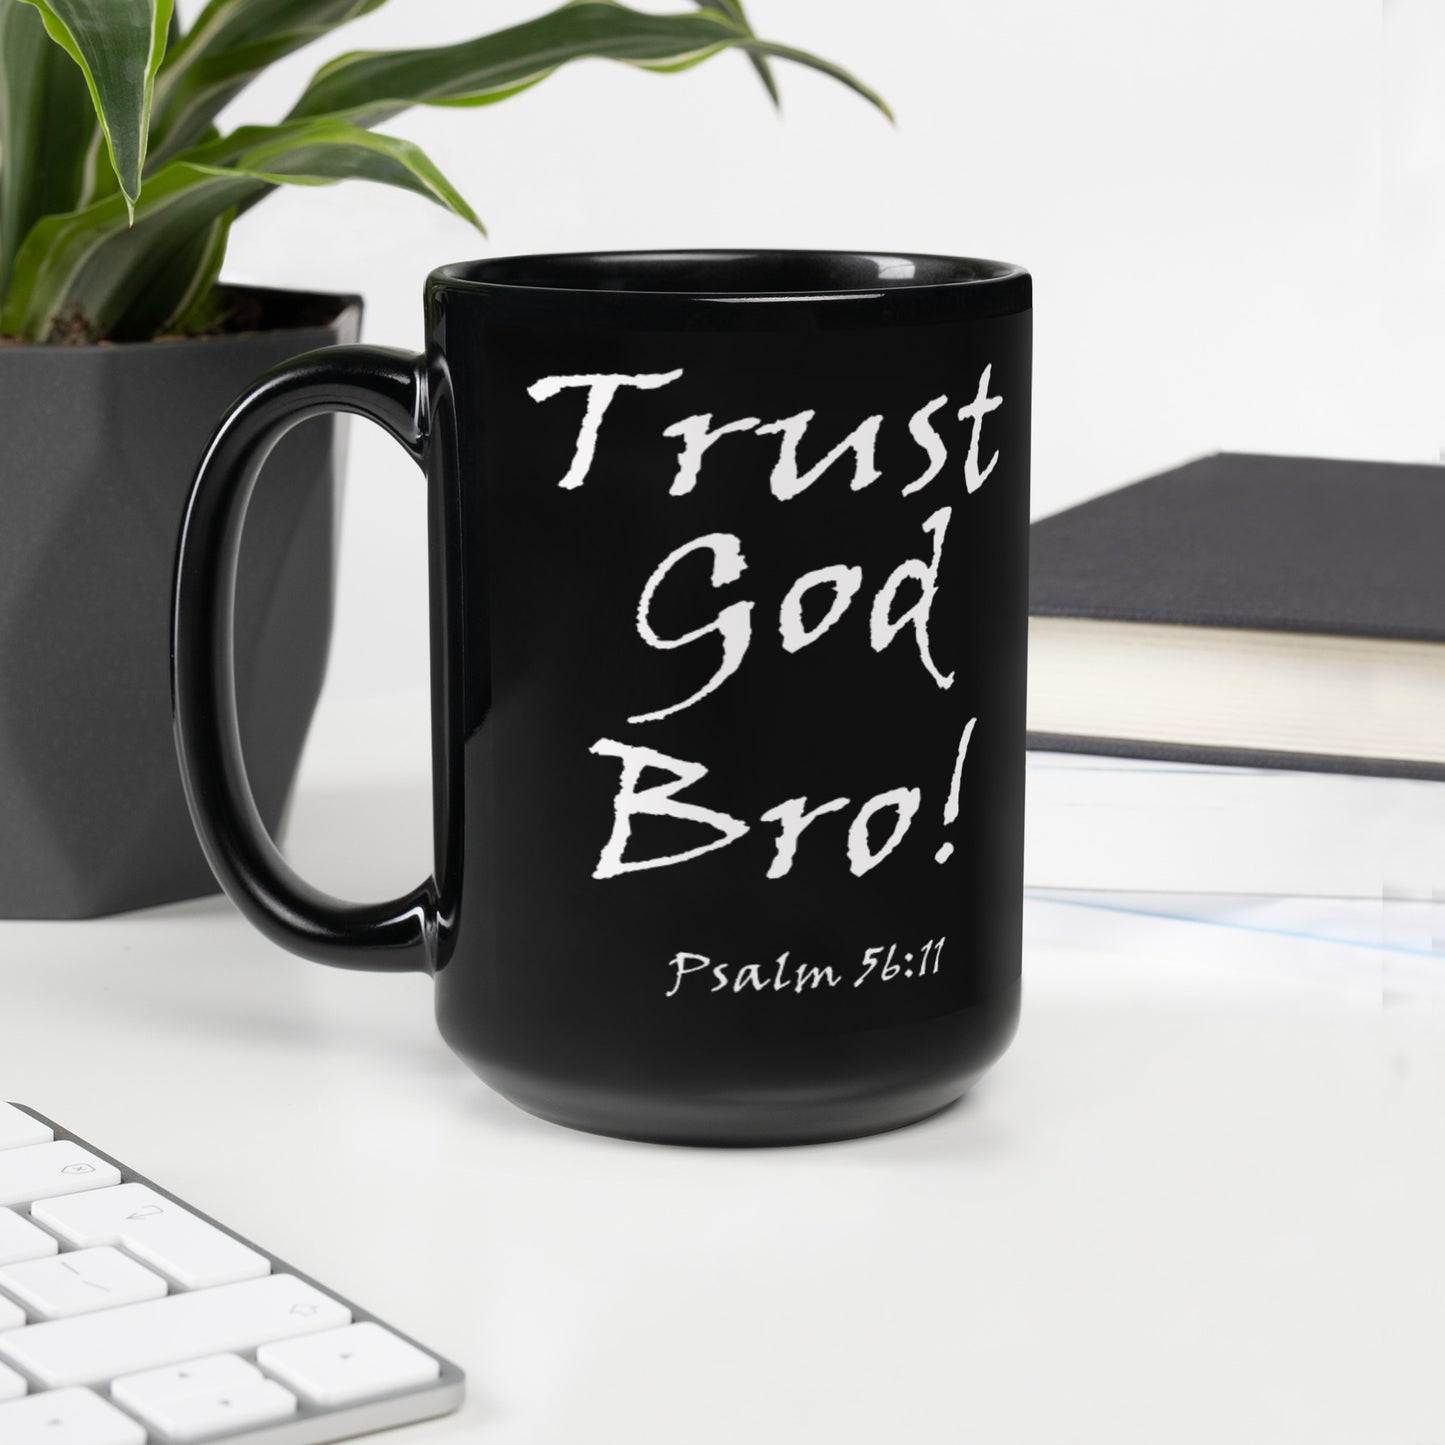 Trust God Bro! Black Glossy Ceramic Mug - Solid Rock Designs | Christian Apparel